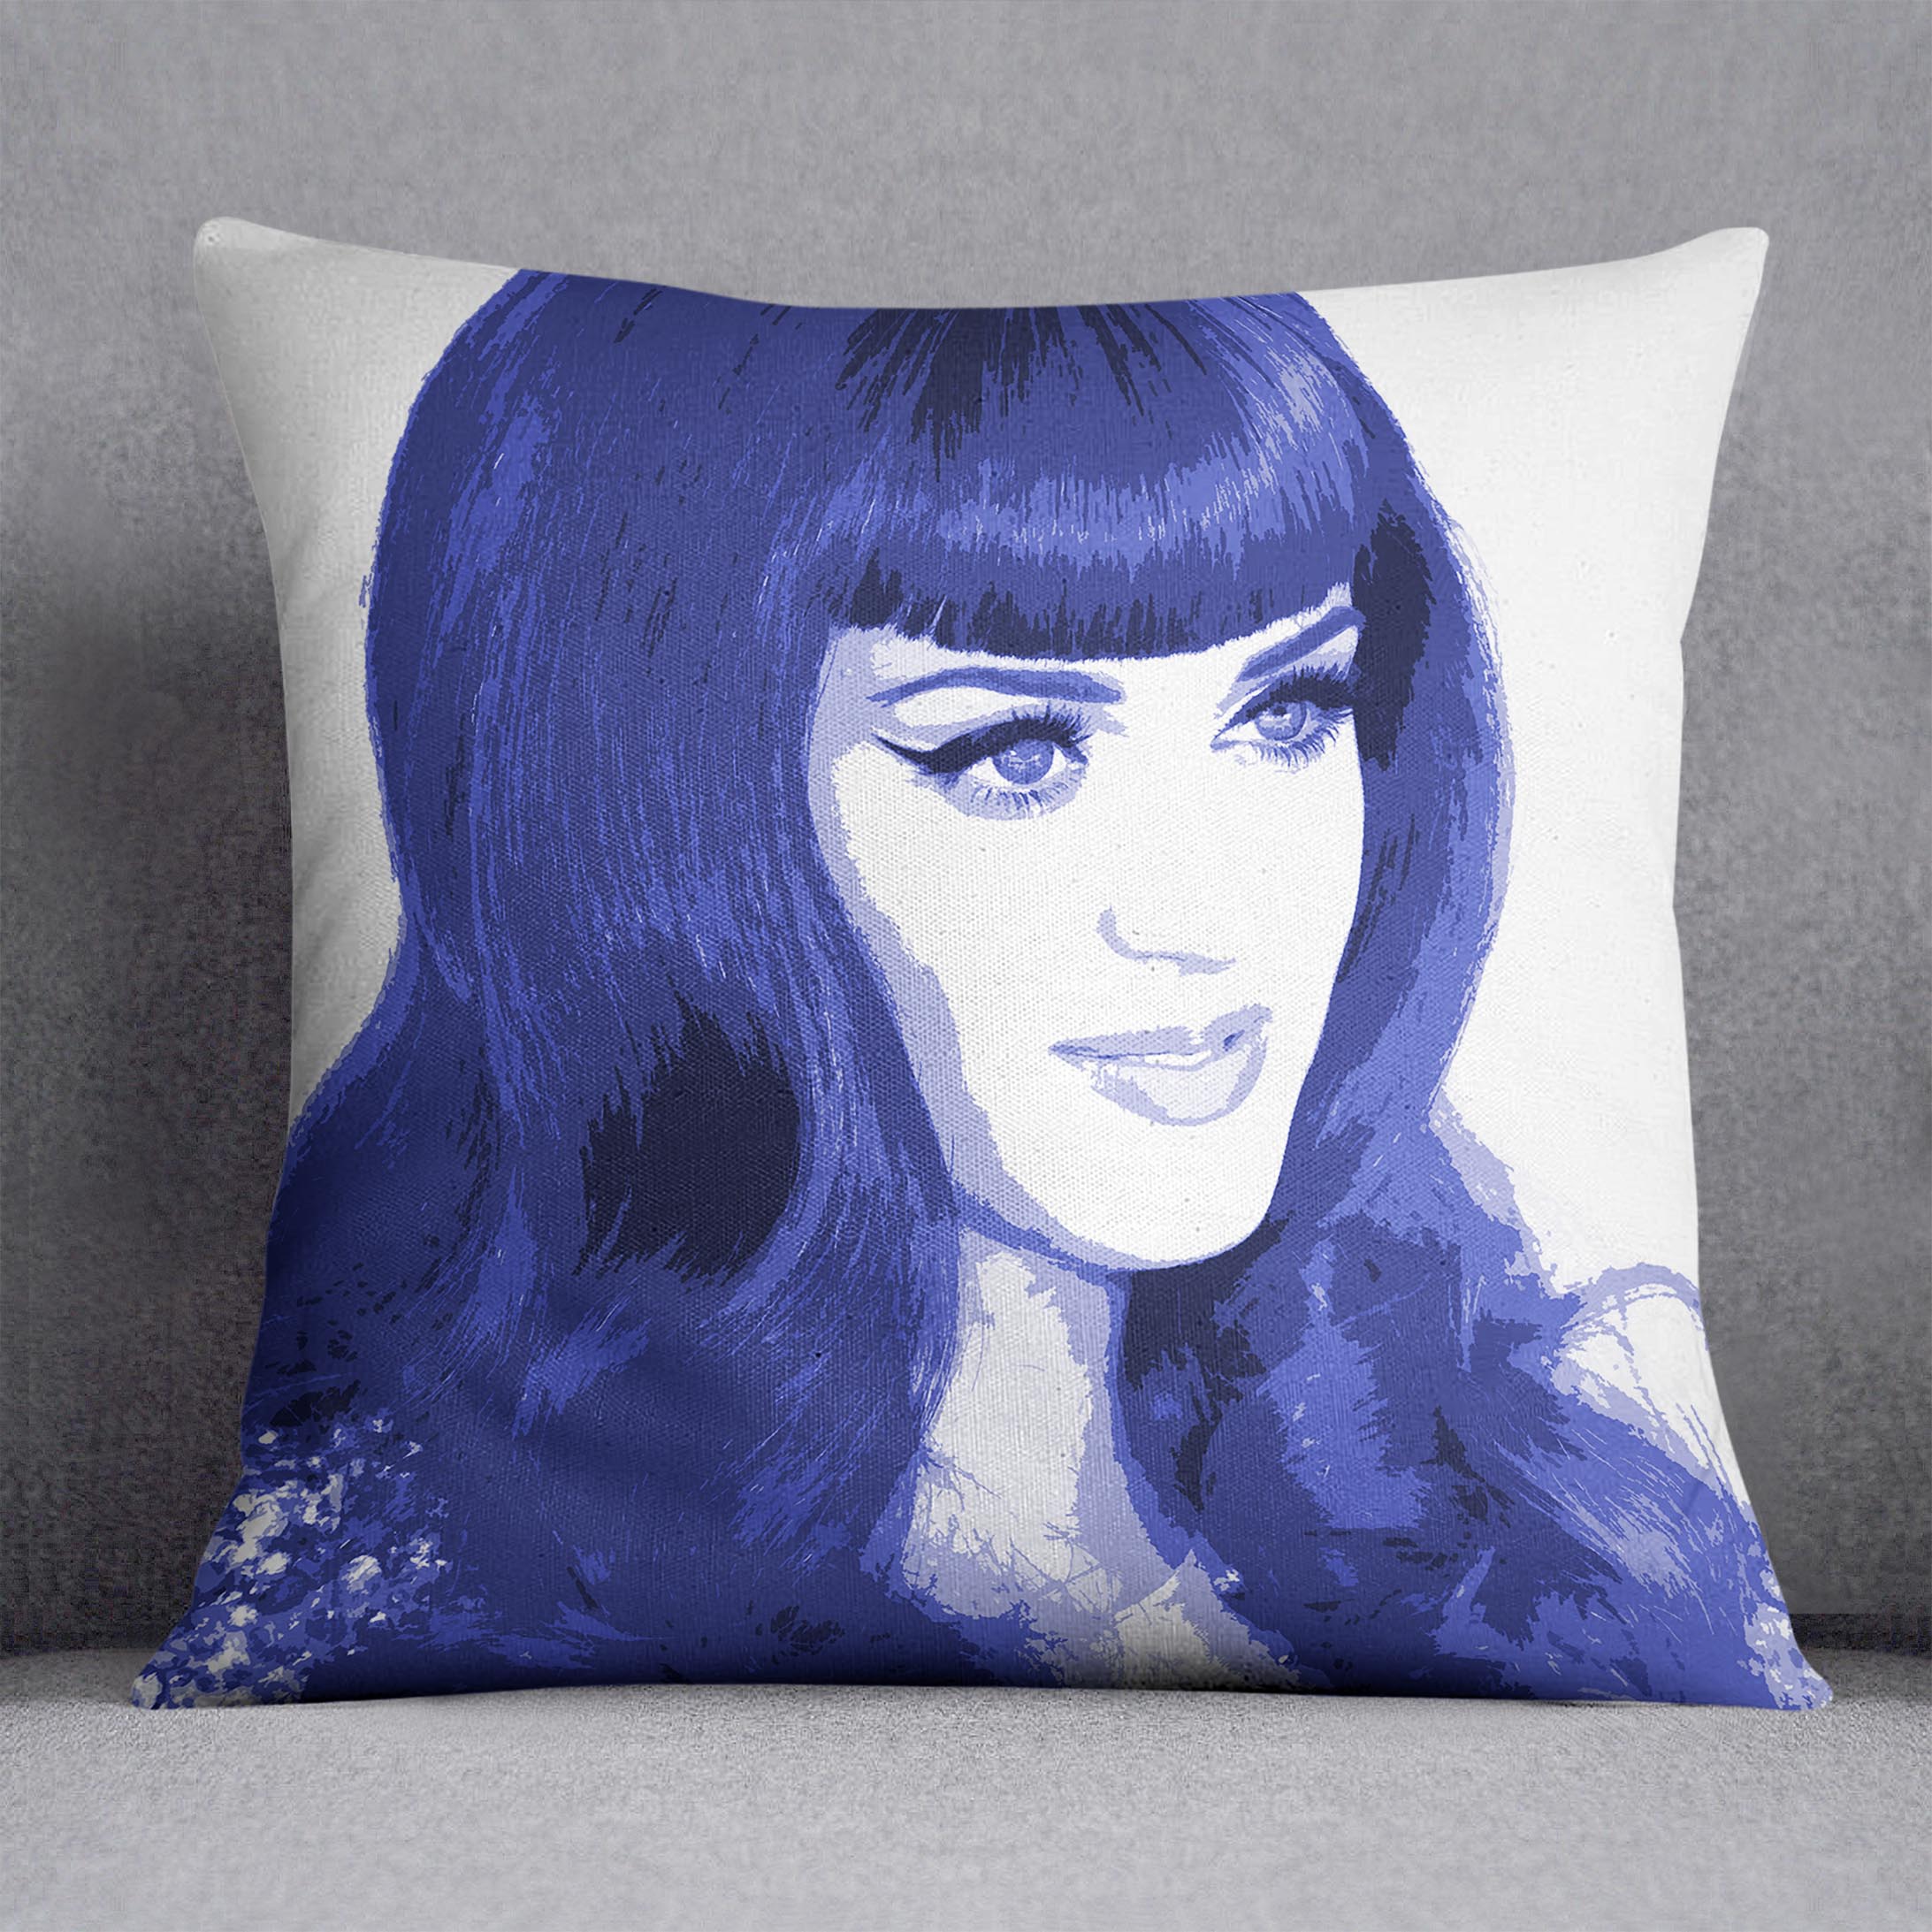 Katy Perry in blue pop art Cushion